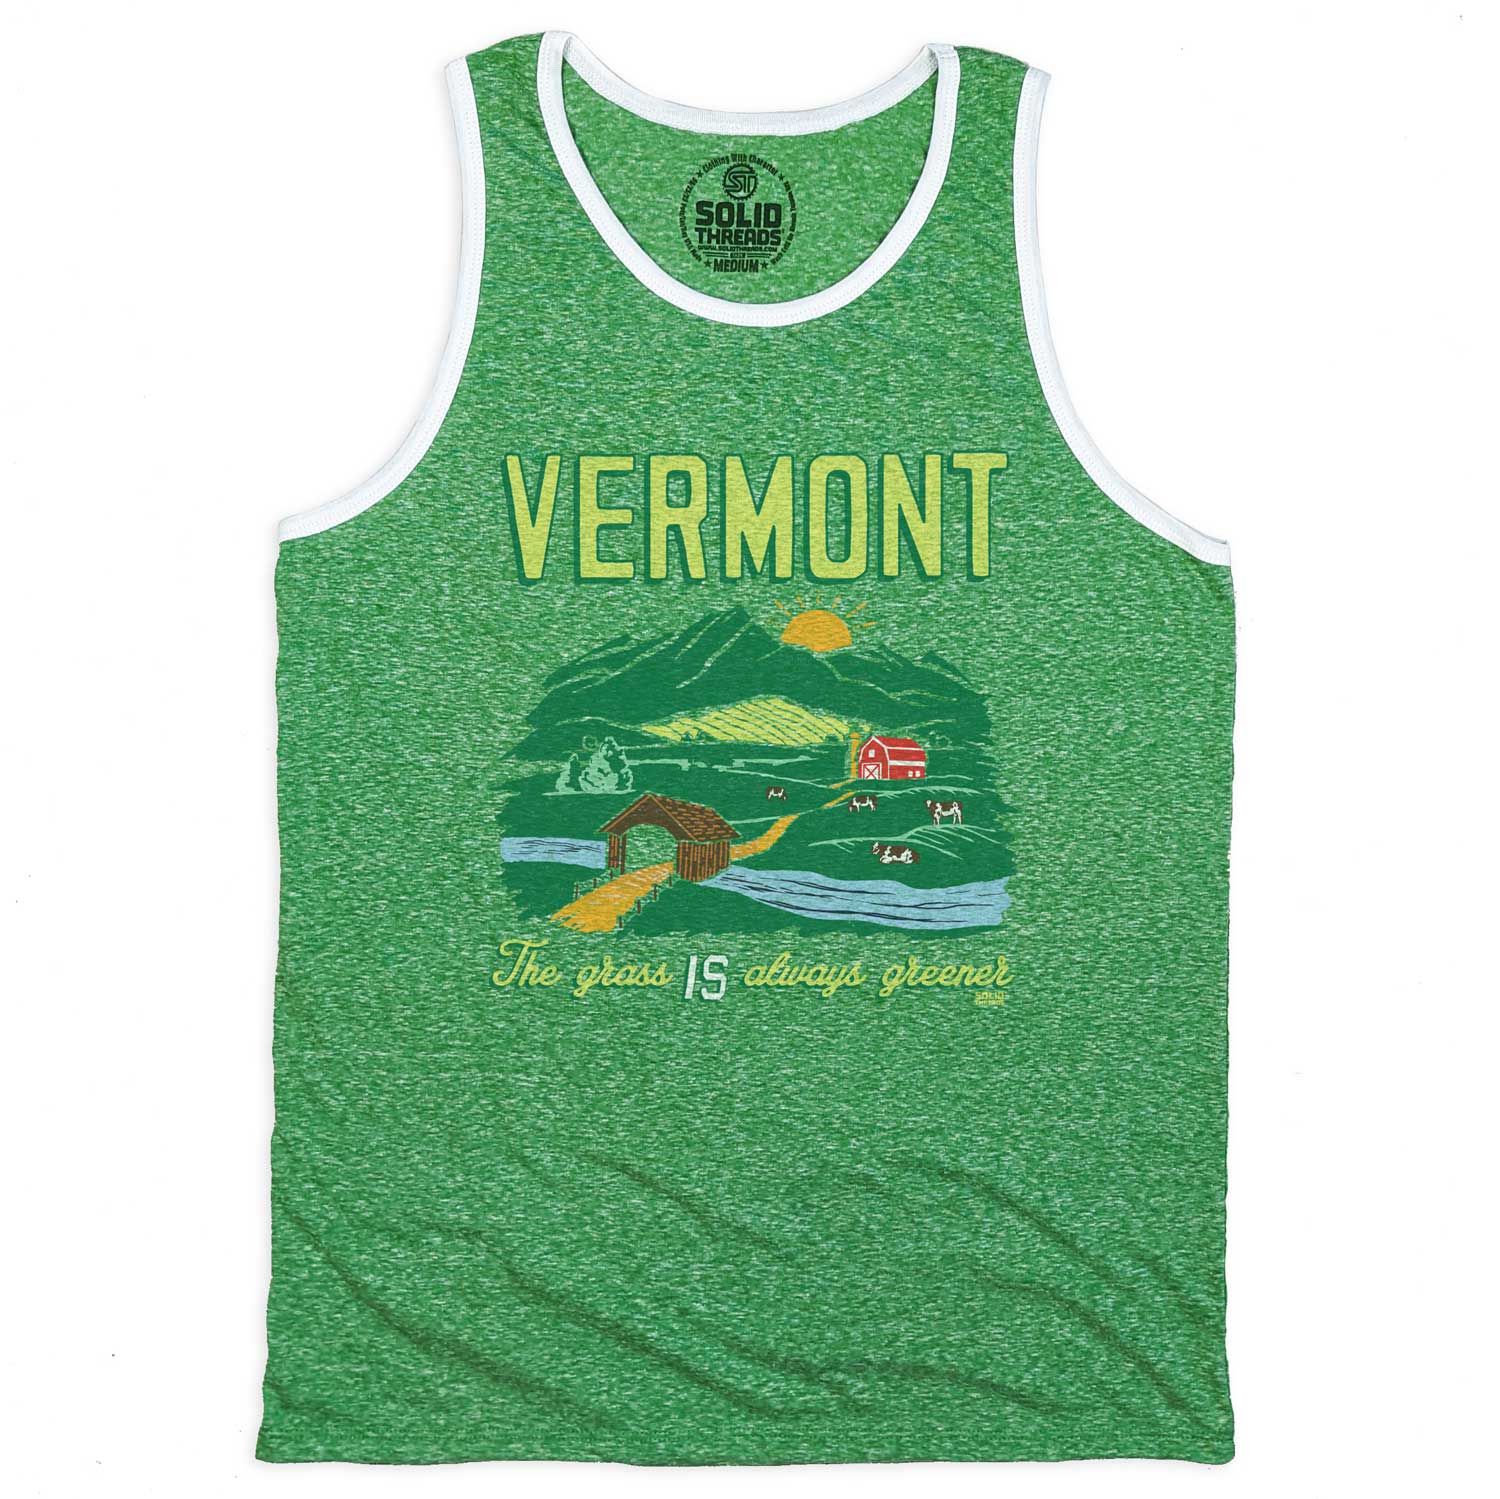 Men's Vermont The Grass IS Always Greener Vintage Graphic Tank Top | Farmland T-shirt | Solid Threads